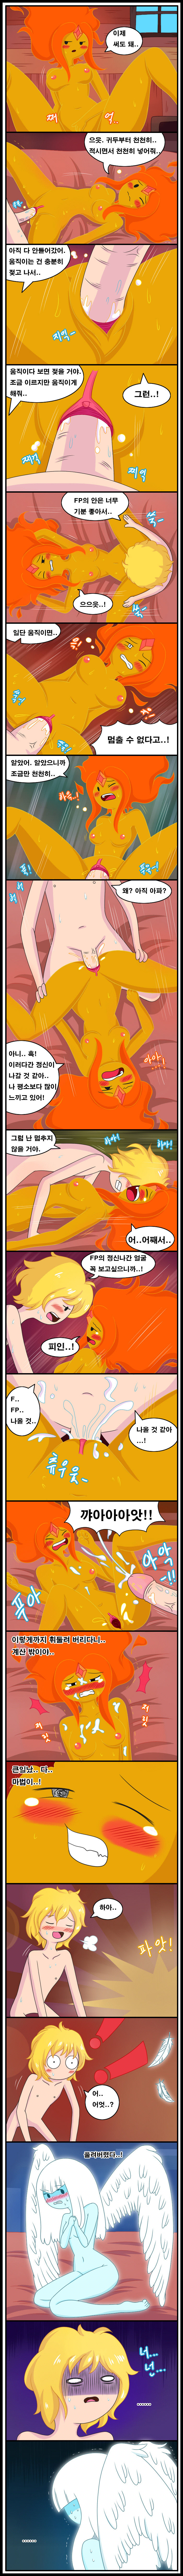 Adult Time 3 (Adventure Time) (Korean) 